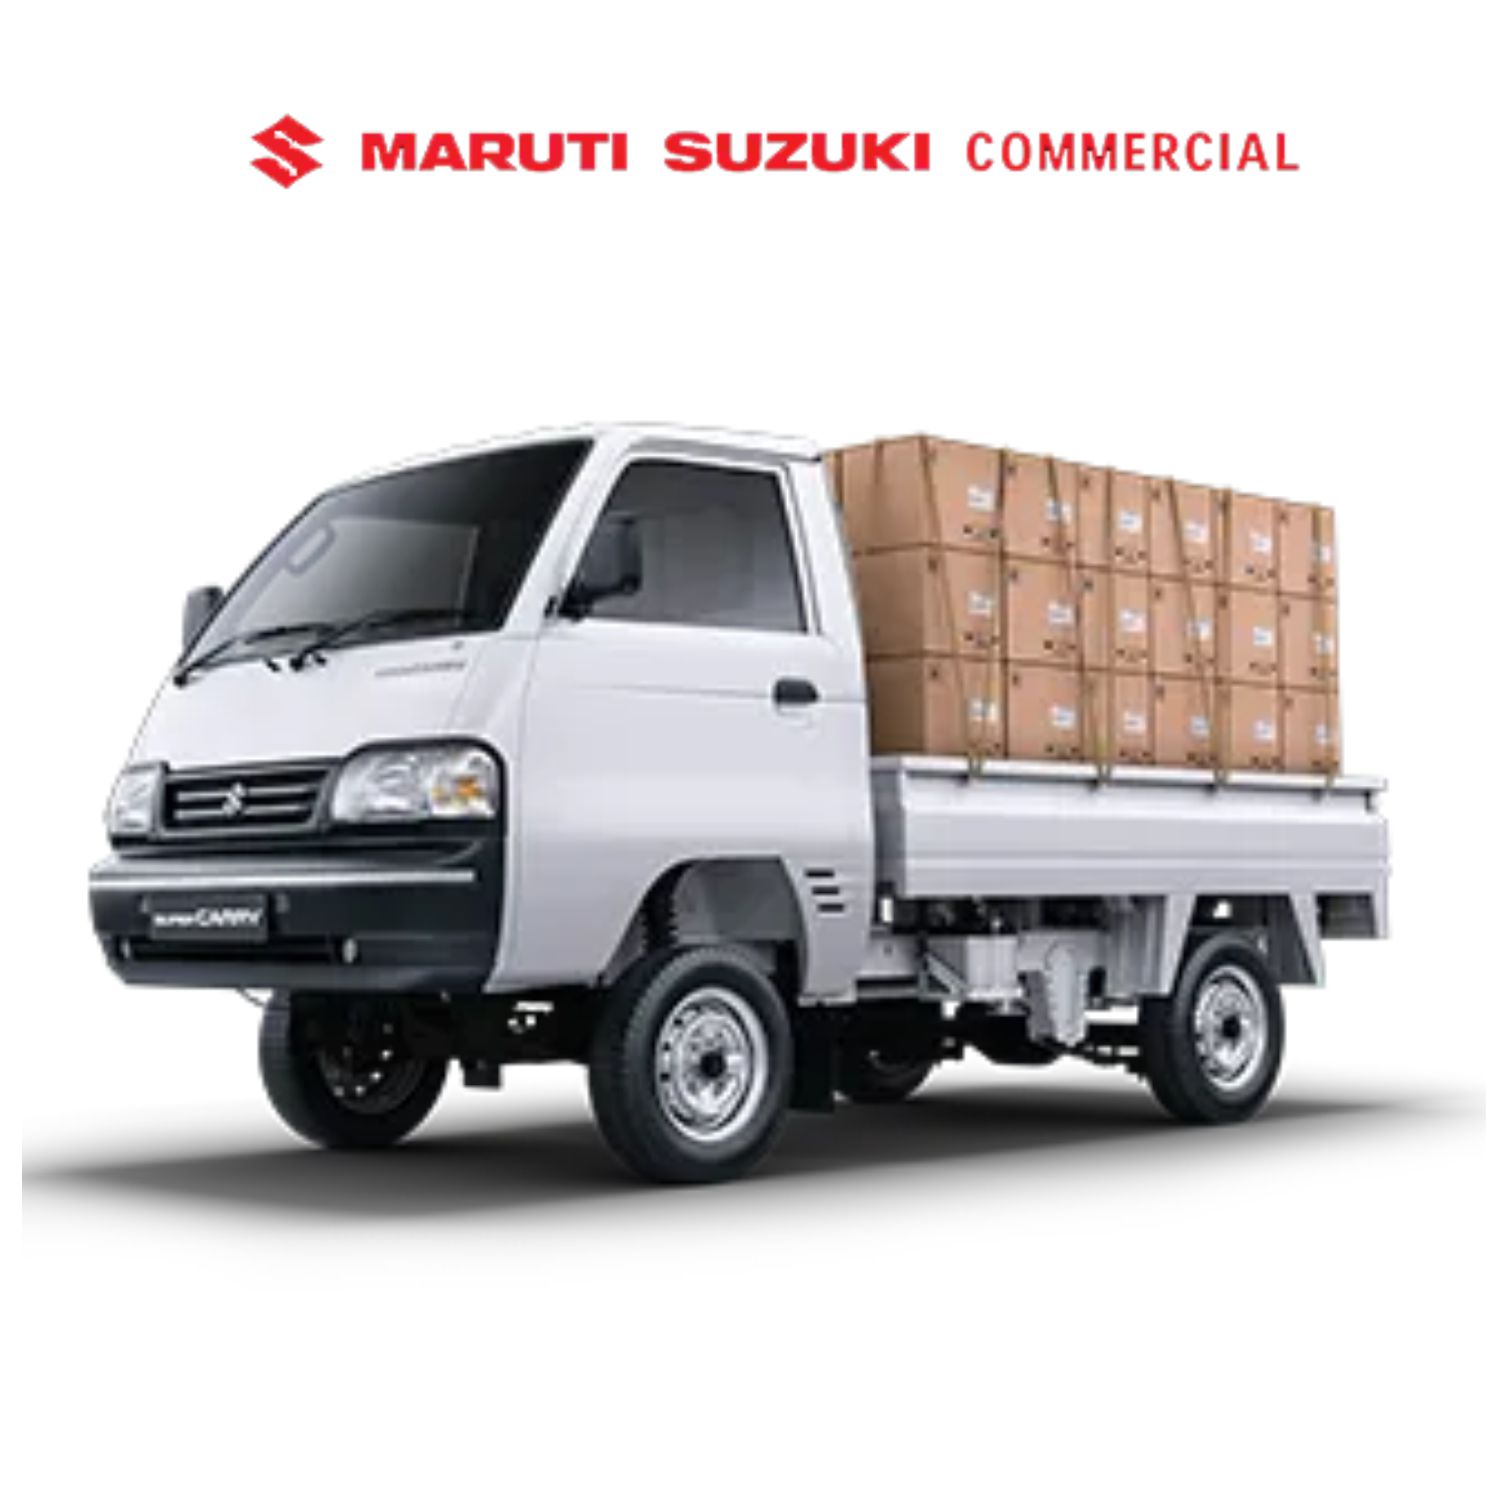 Maruti Suzuki Commercial Super Carry Indore